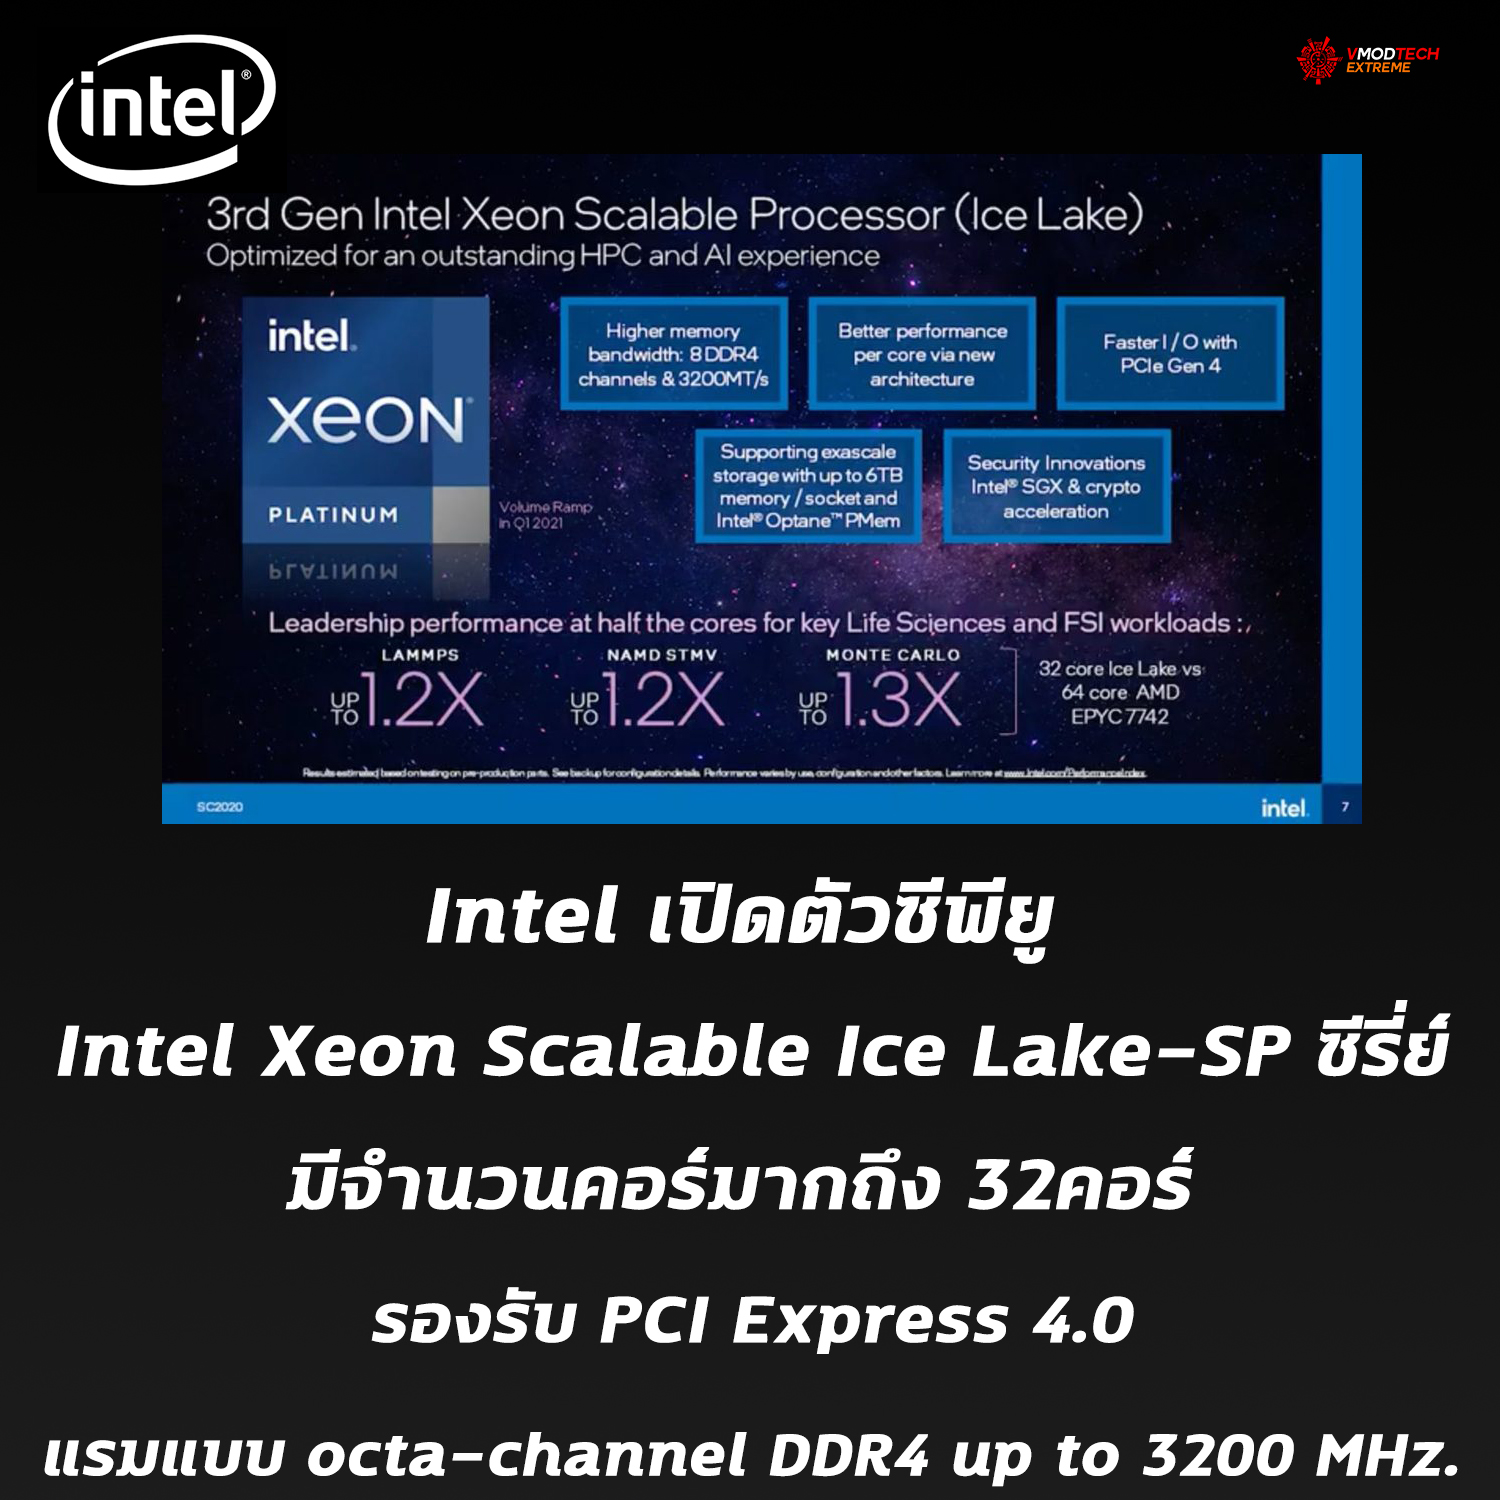 intel xeon scalable ice lake sp Intel เปิดตัวซีพียู Intel Xeon Scalable Ice Lake SP ซีรี่ย์ในรุ่นที่3 ใหม่ล่าสุดมีจำนวนคอร์มากถึง 32คอร์